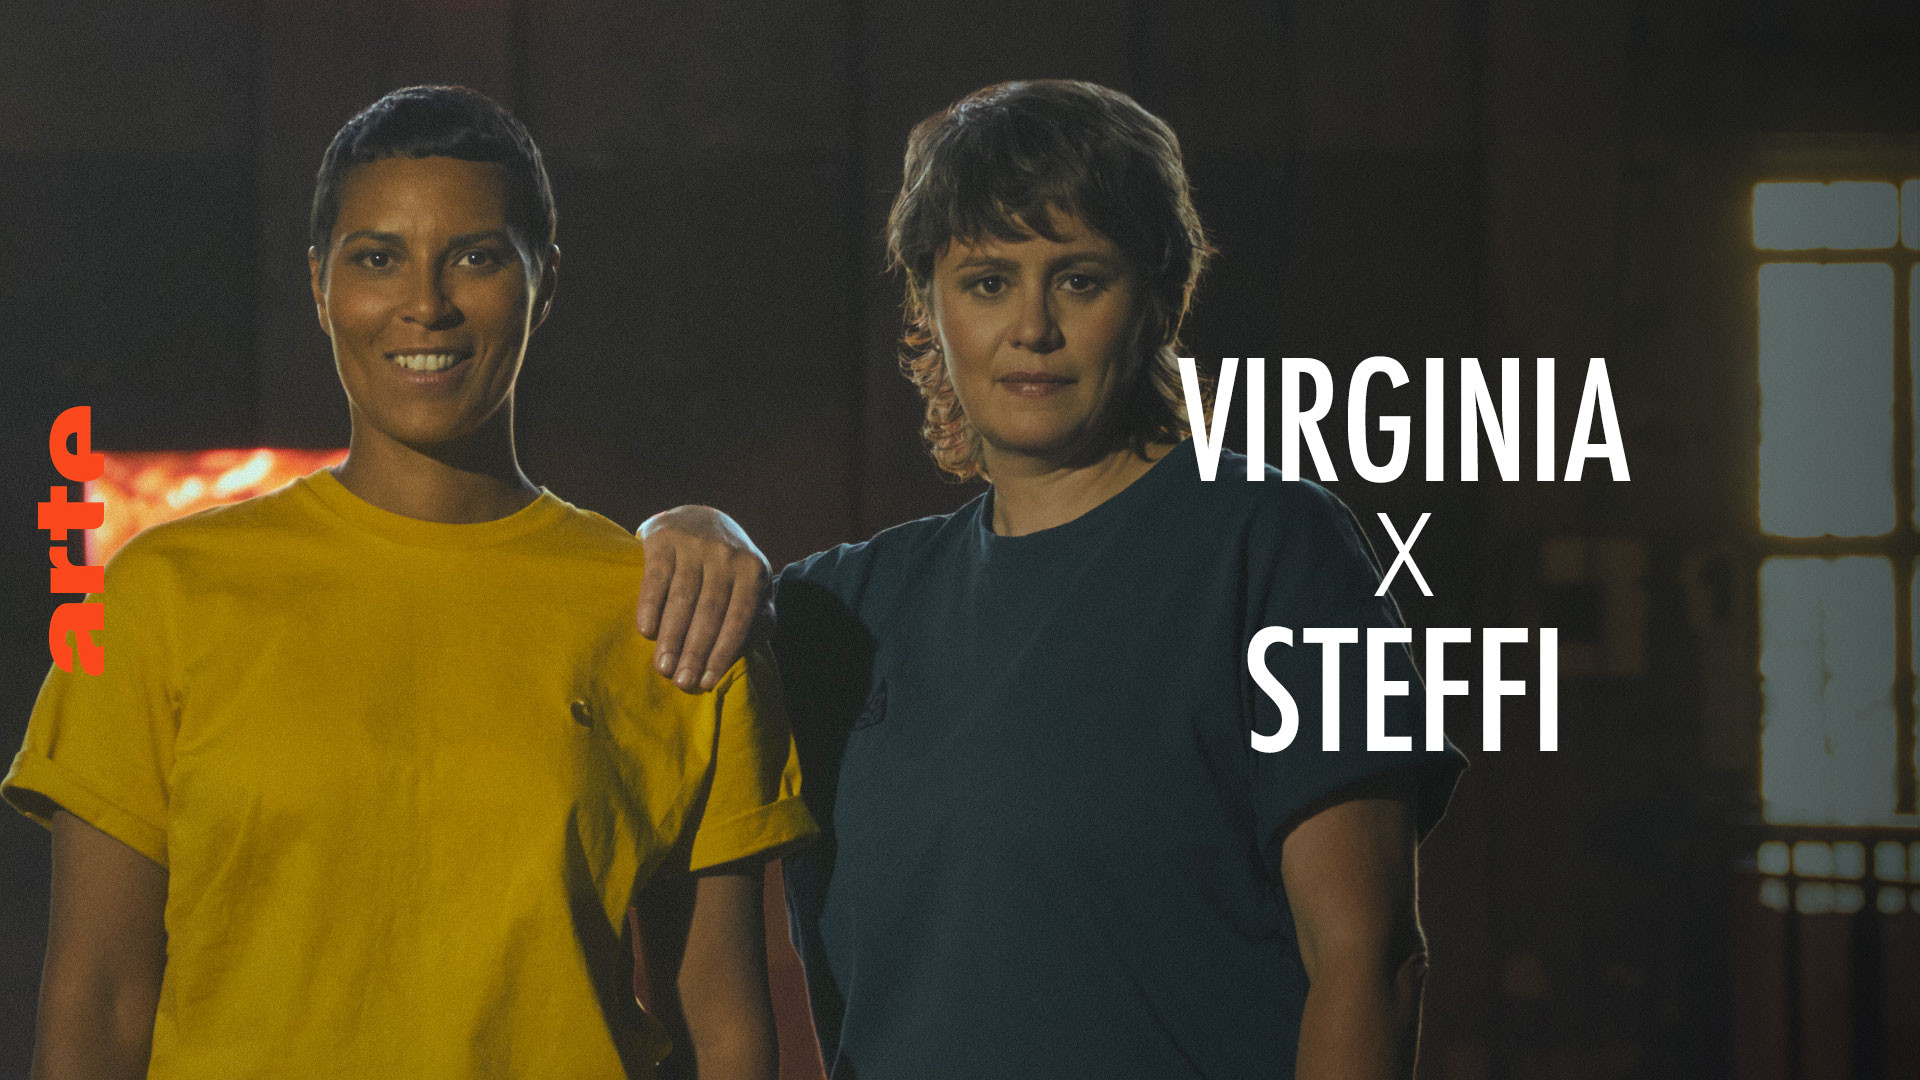 Steffi X Virginia